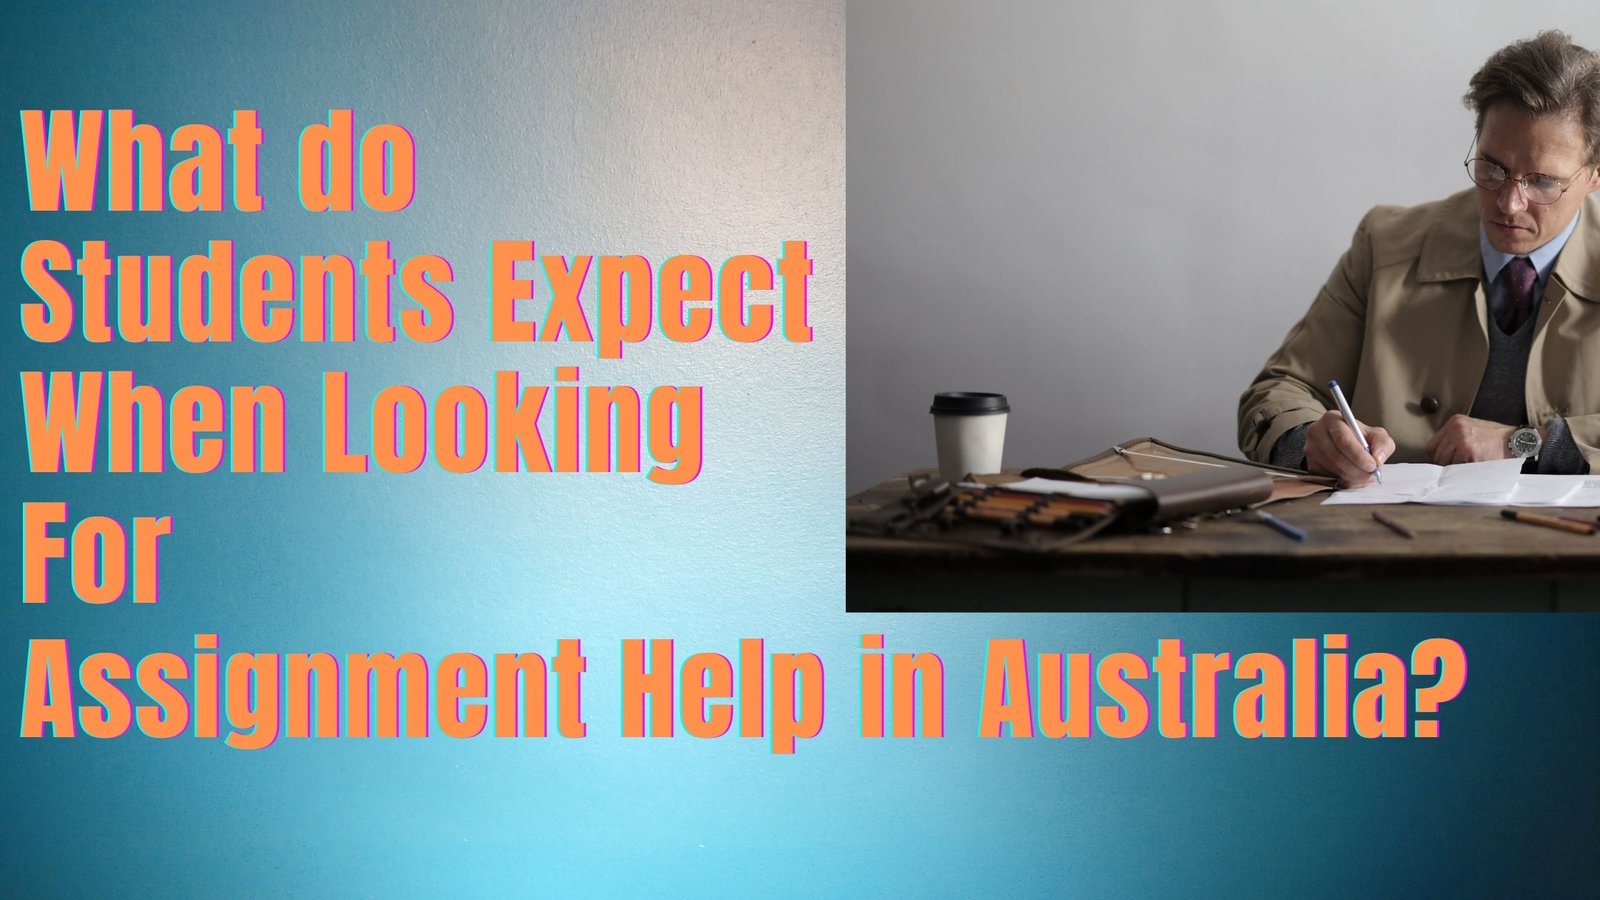 my assignment help Australia